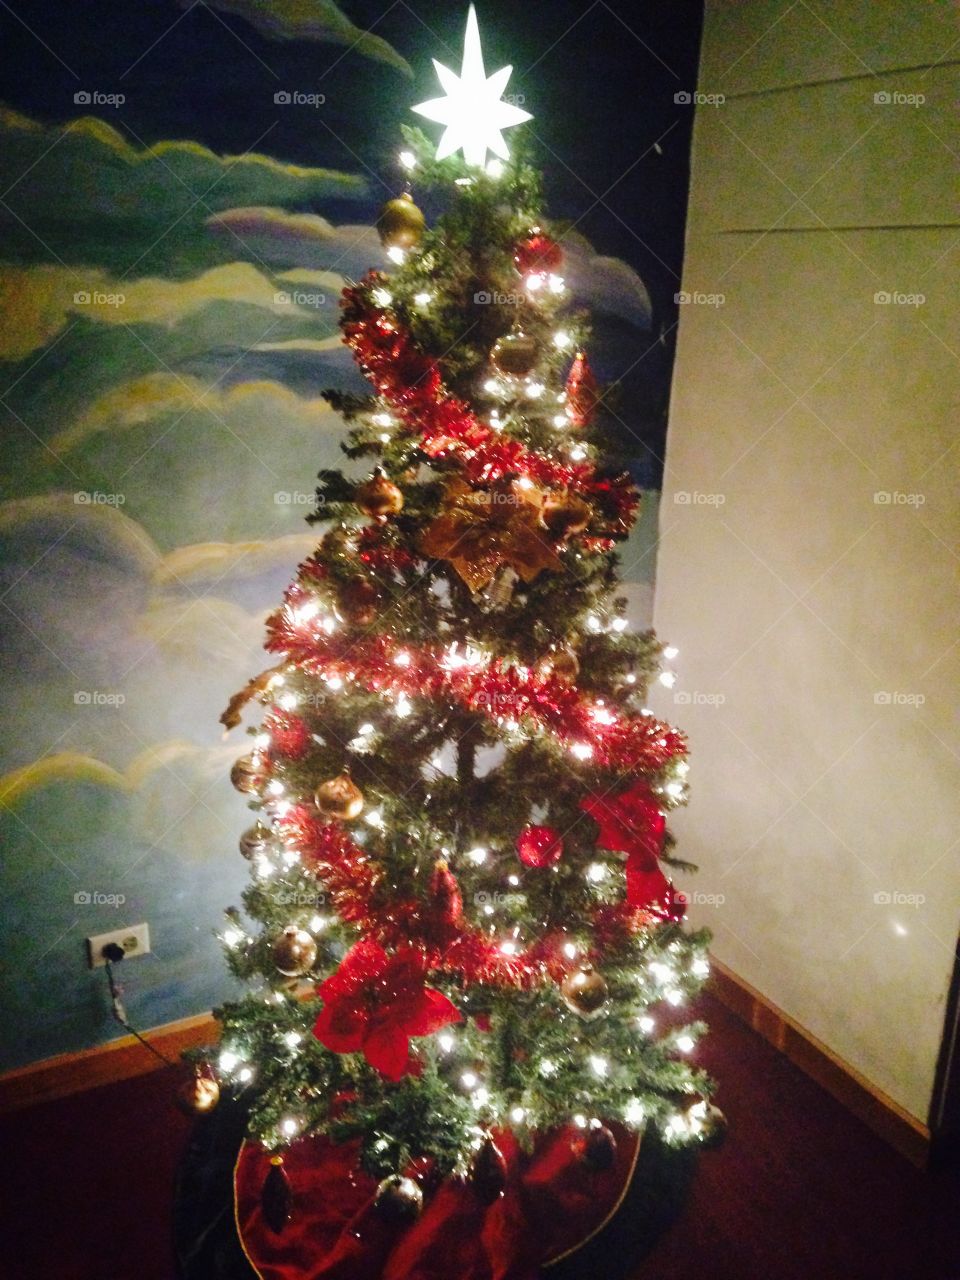 Oh Christmas tree